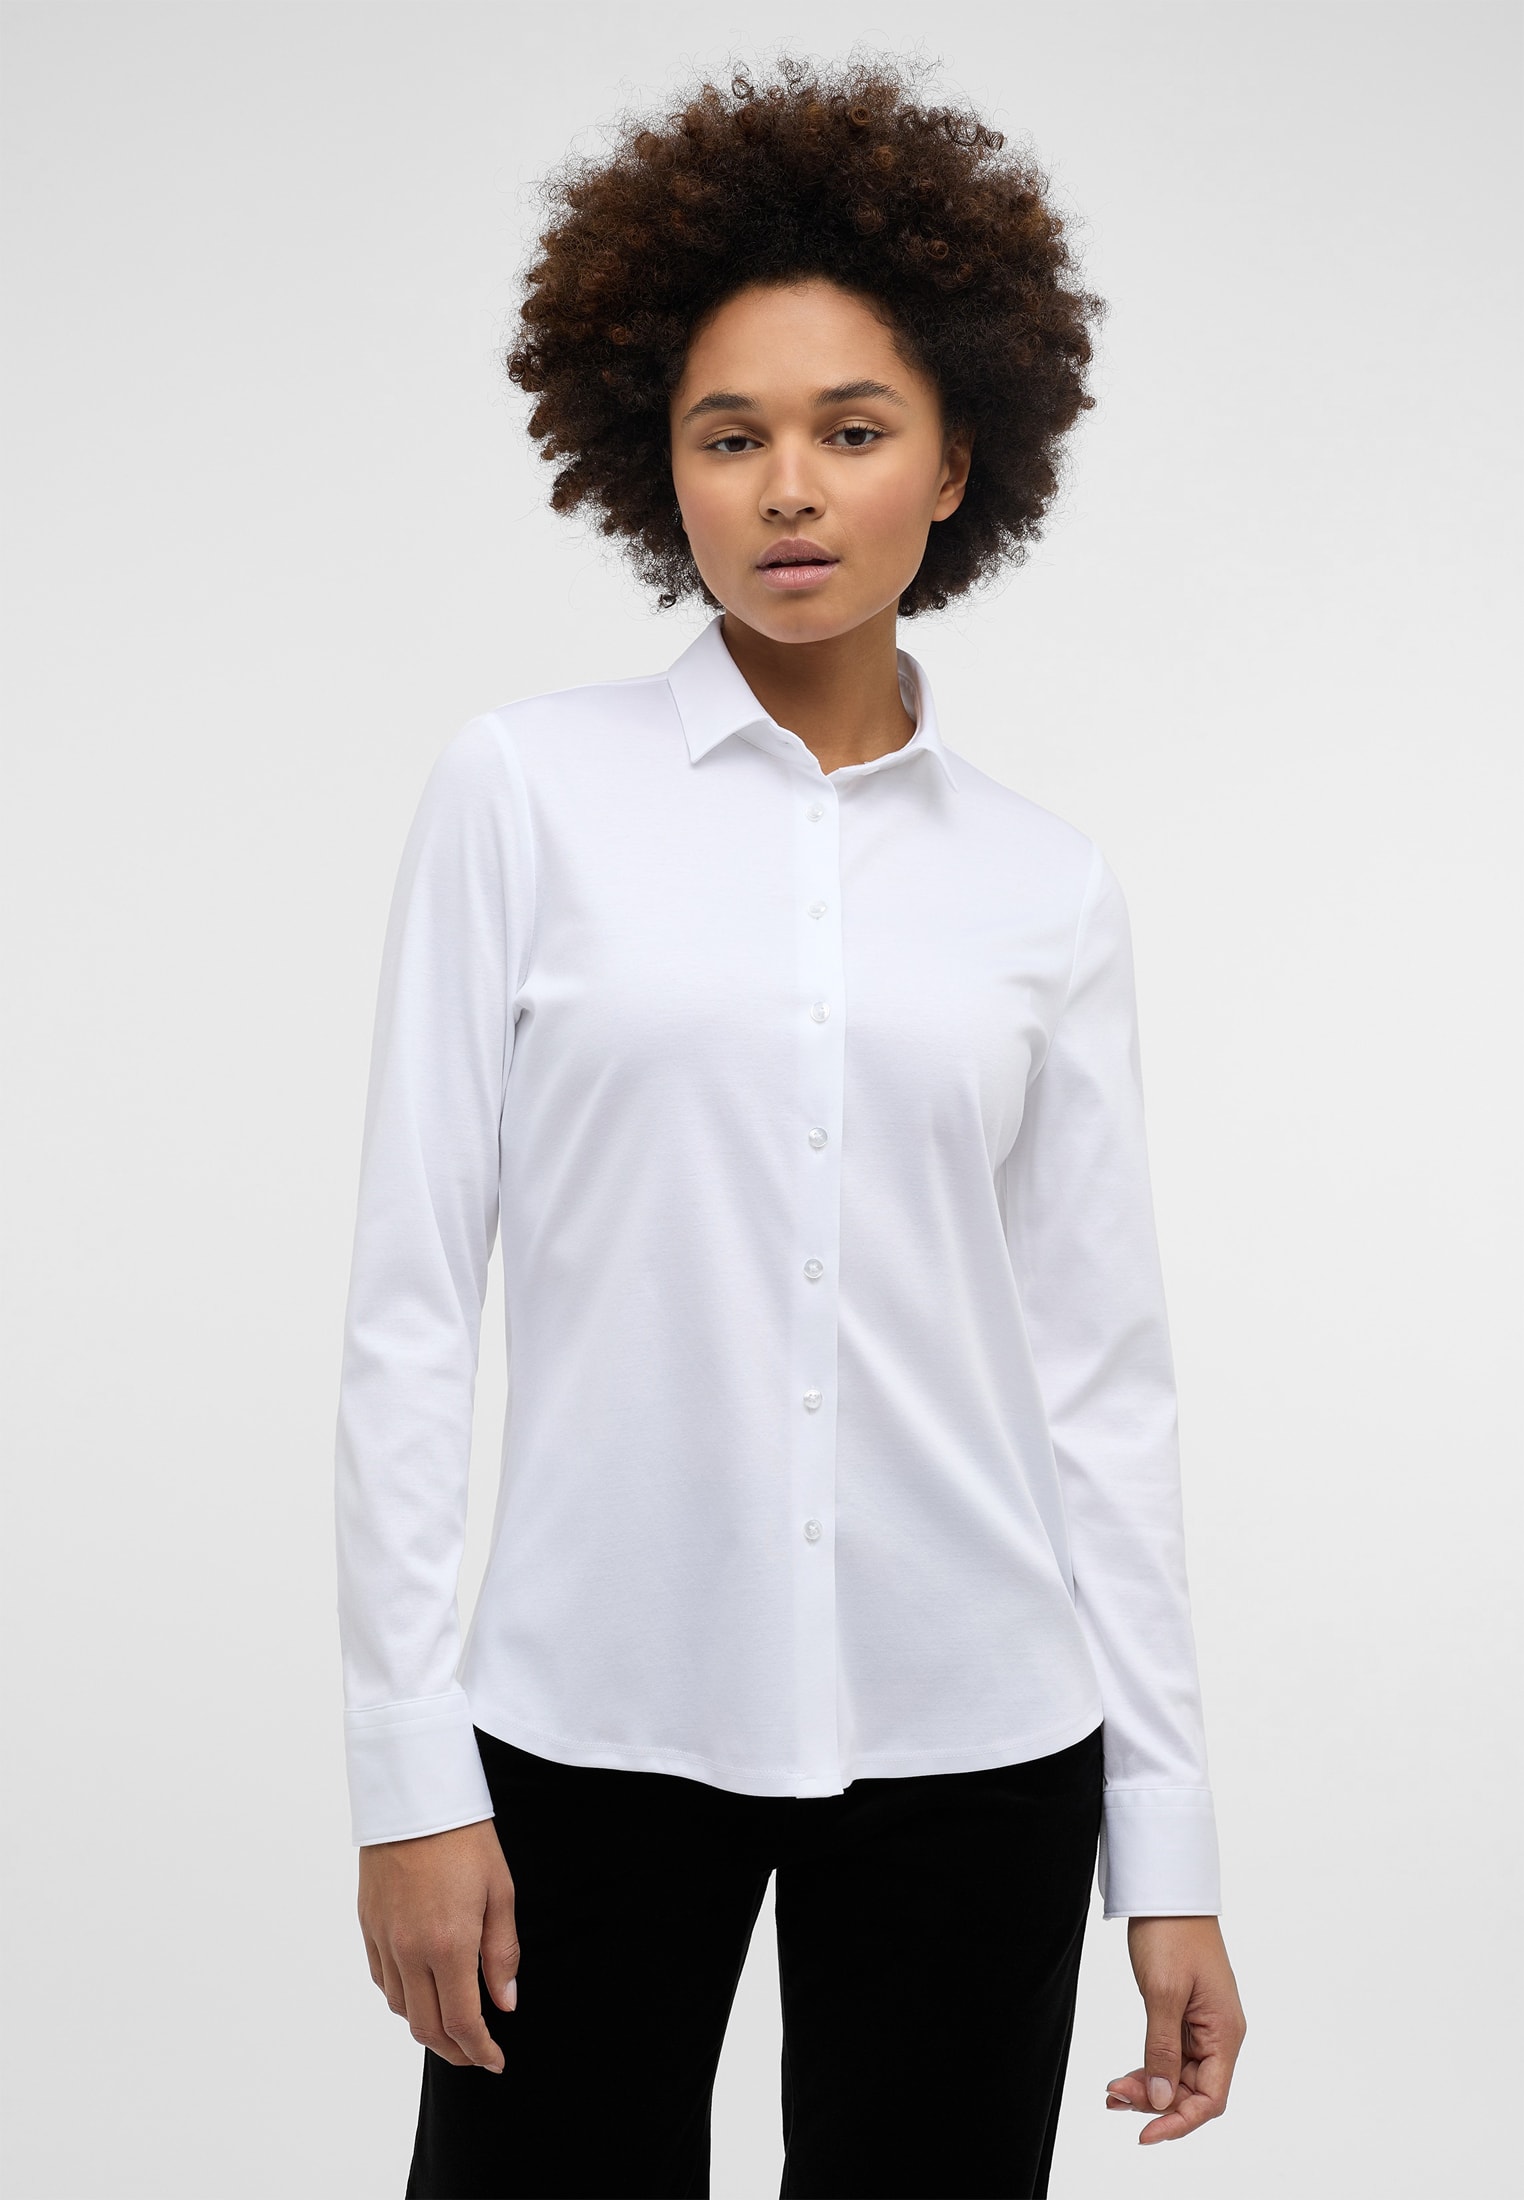 Jersey Shirt Blouse in 2BL00229-00-01-42-1/1 | | | plain white 42 | long sleeve white